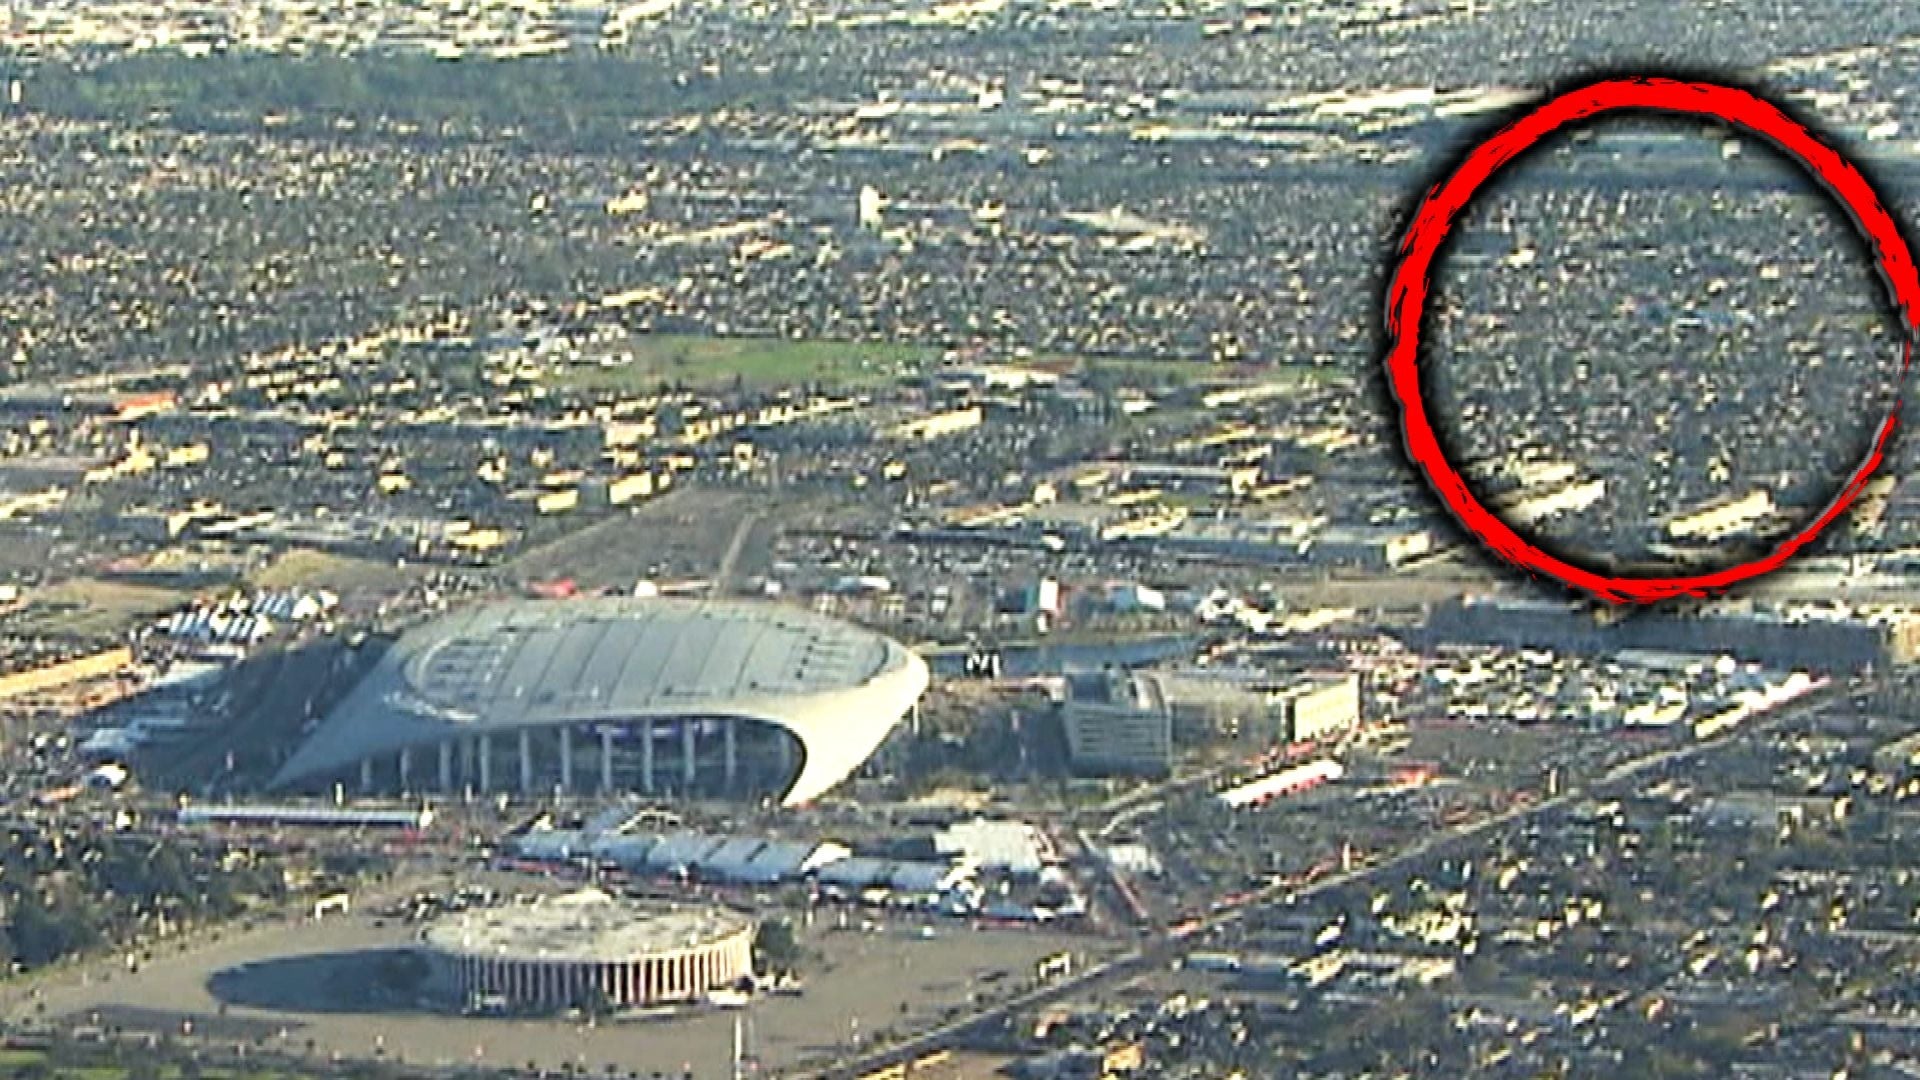 Los Angeles Landmarks Step Up Security Ahead of Super Bowl at SoFi Stadium  | Inside Edition